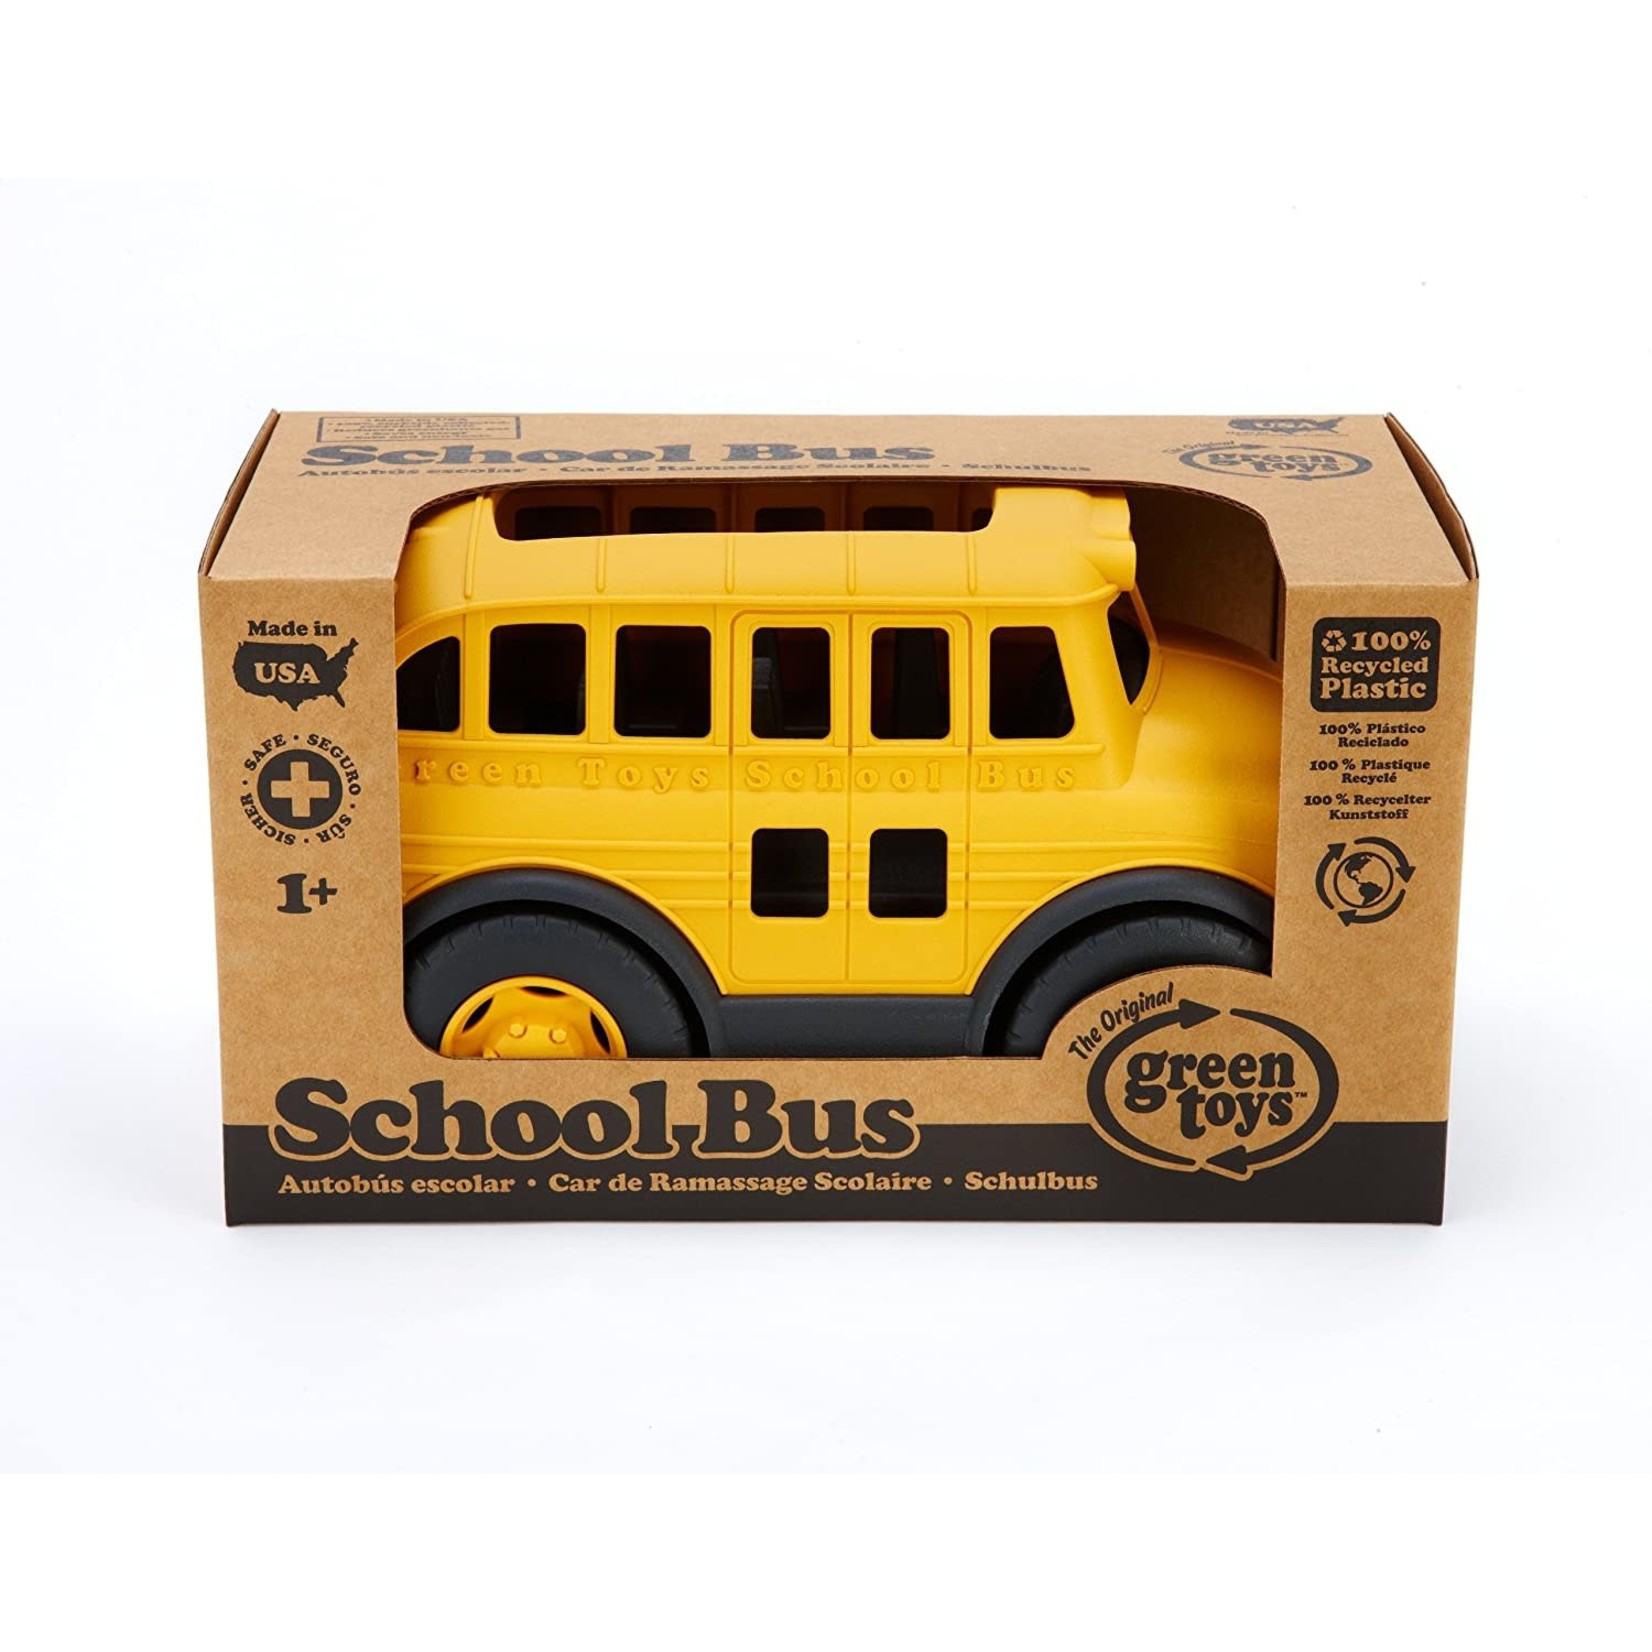 School Bus 1+